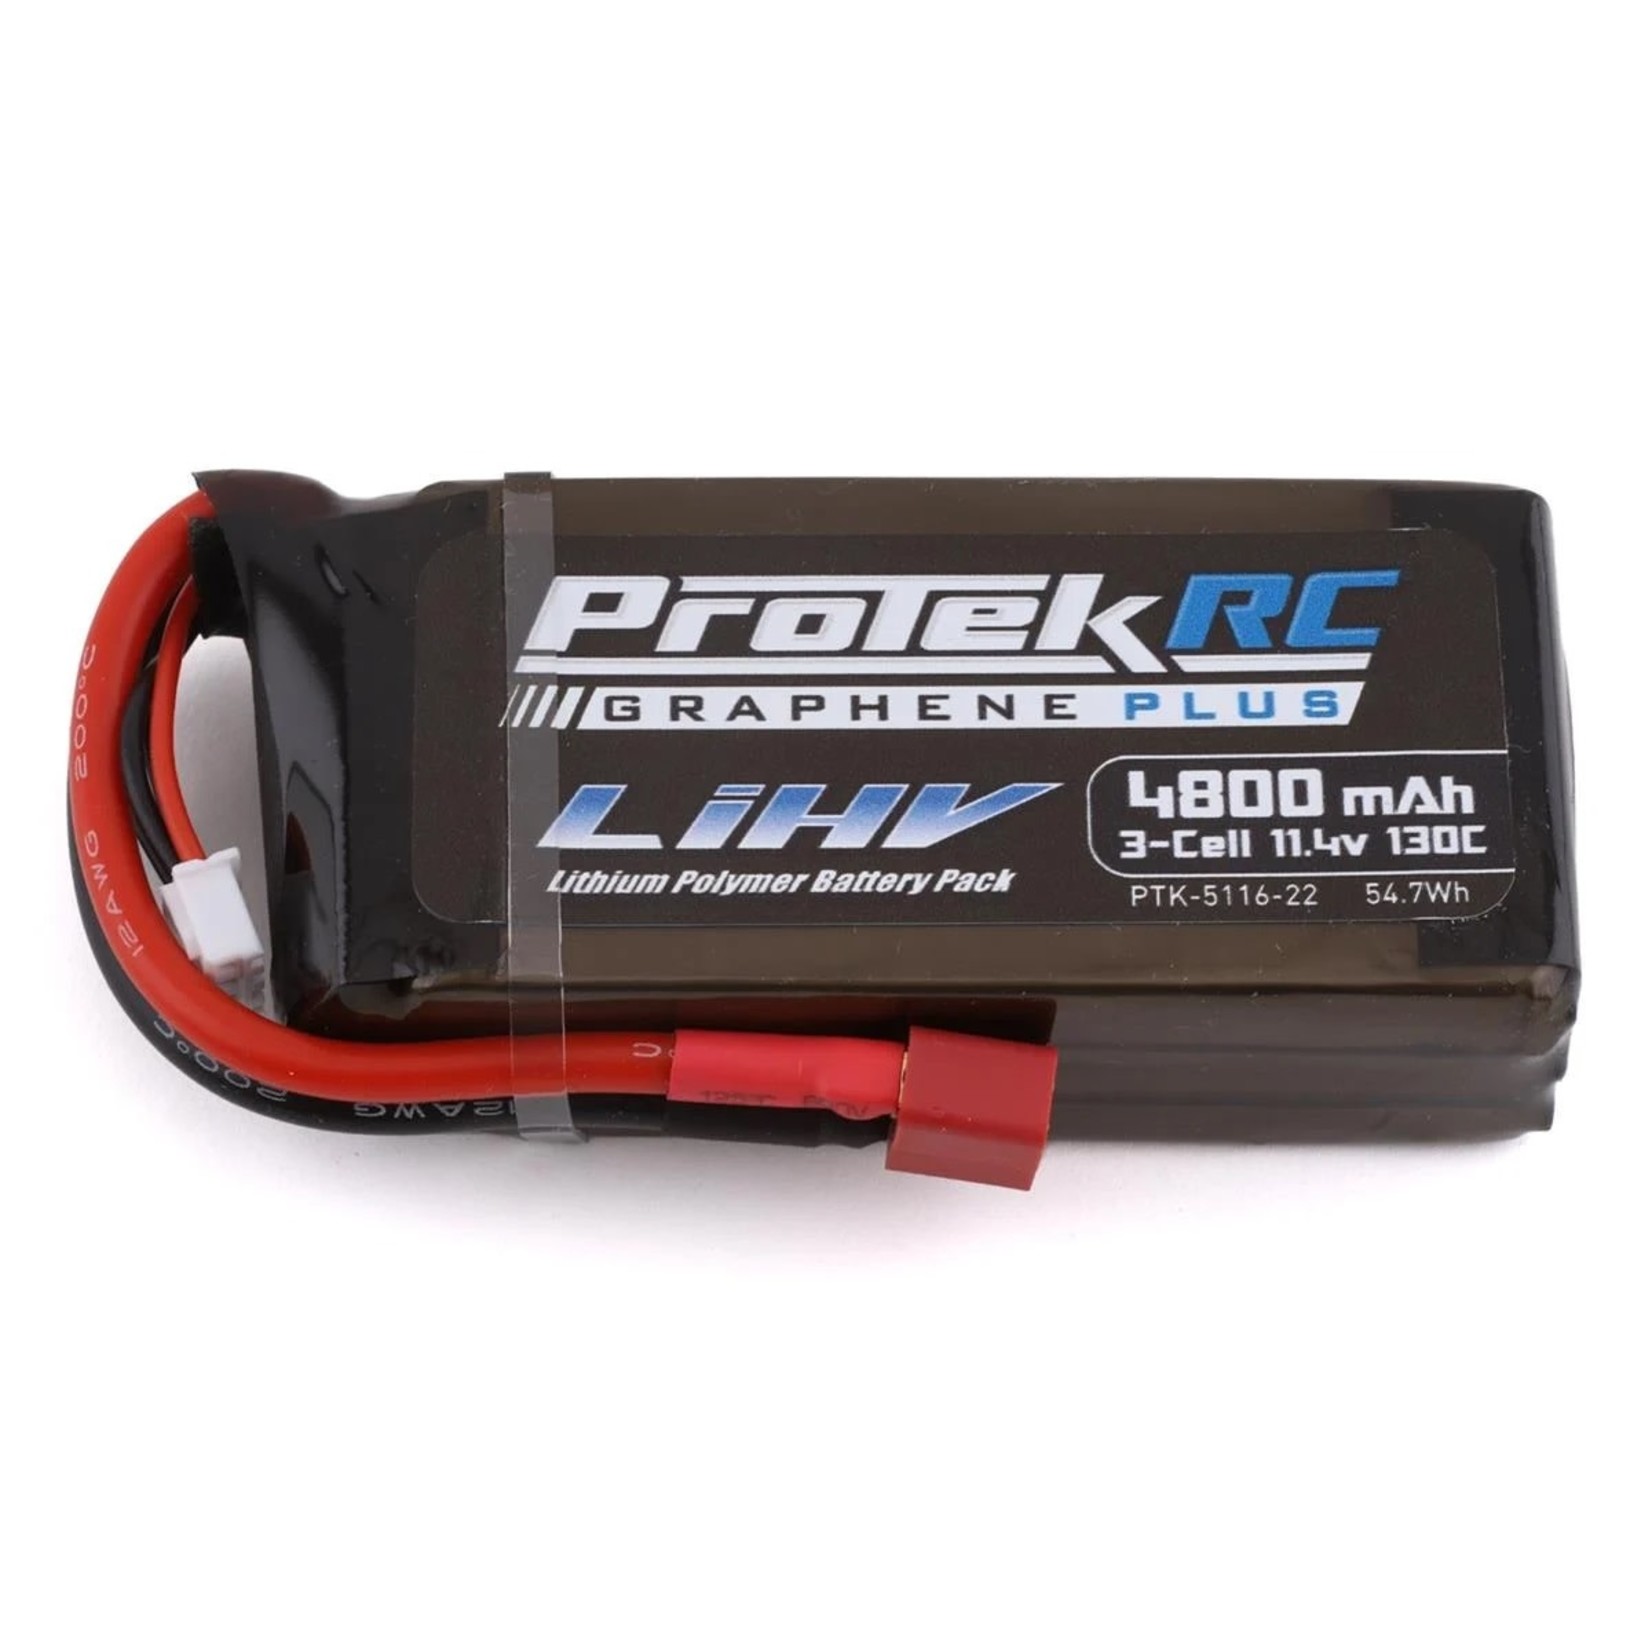 ProTek RC ProTek RC 3S 130C Low IR Si-Graphene + HV Shorty LiPo Battery (11.4V/4800mAh) Crawler Pack w/T-Style Plug #PTK-5116-22